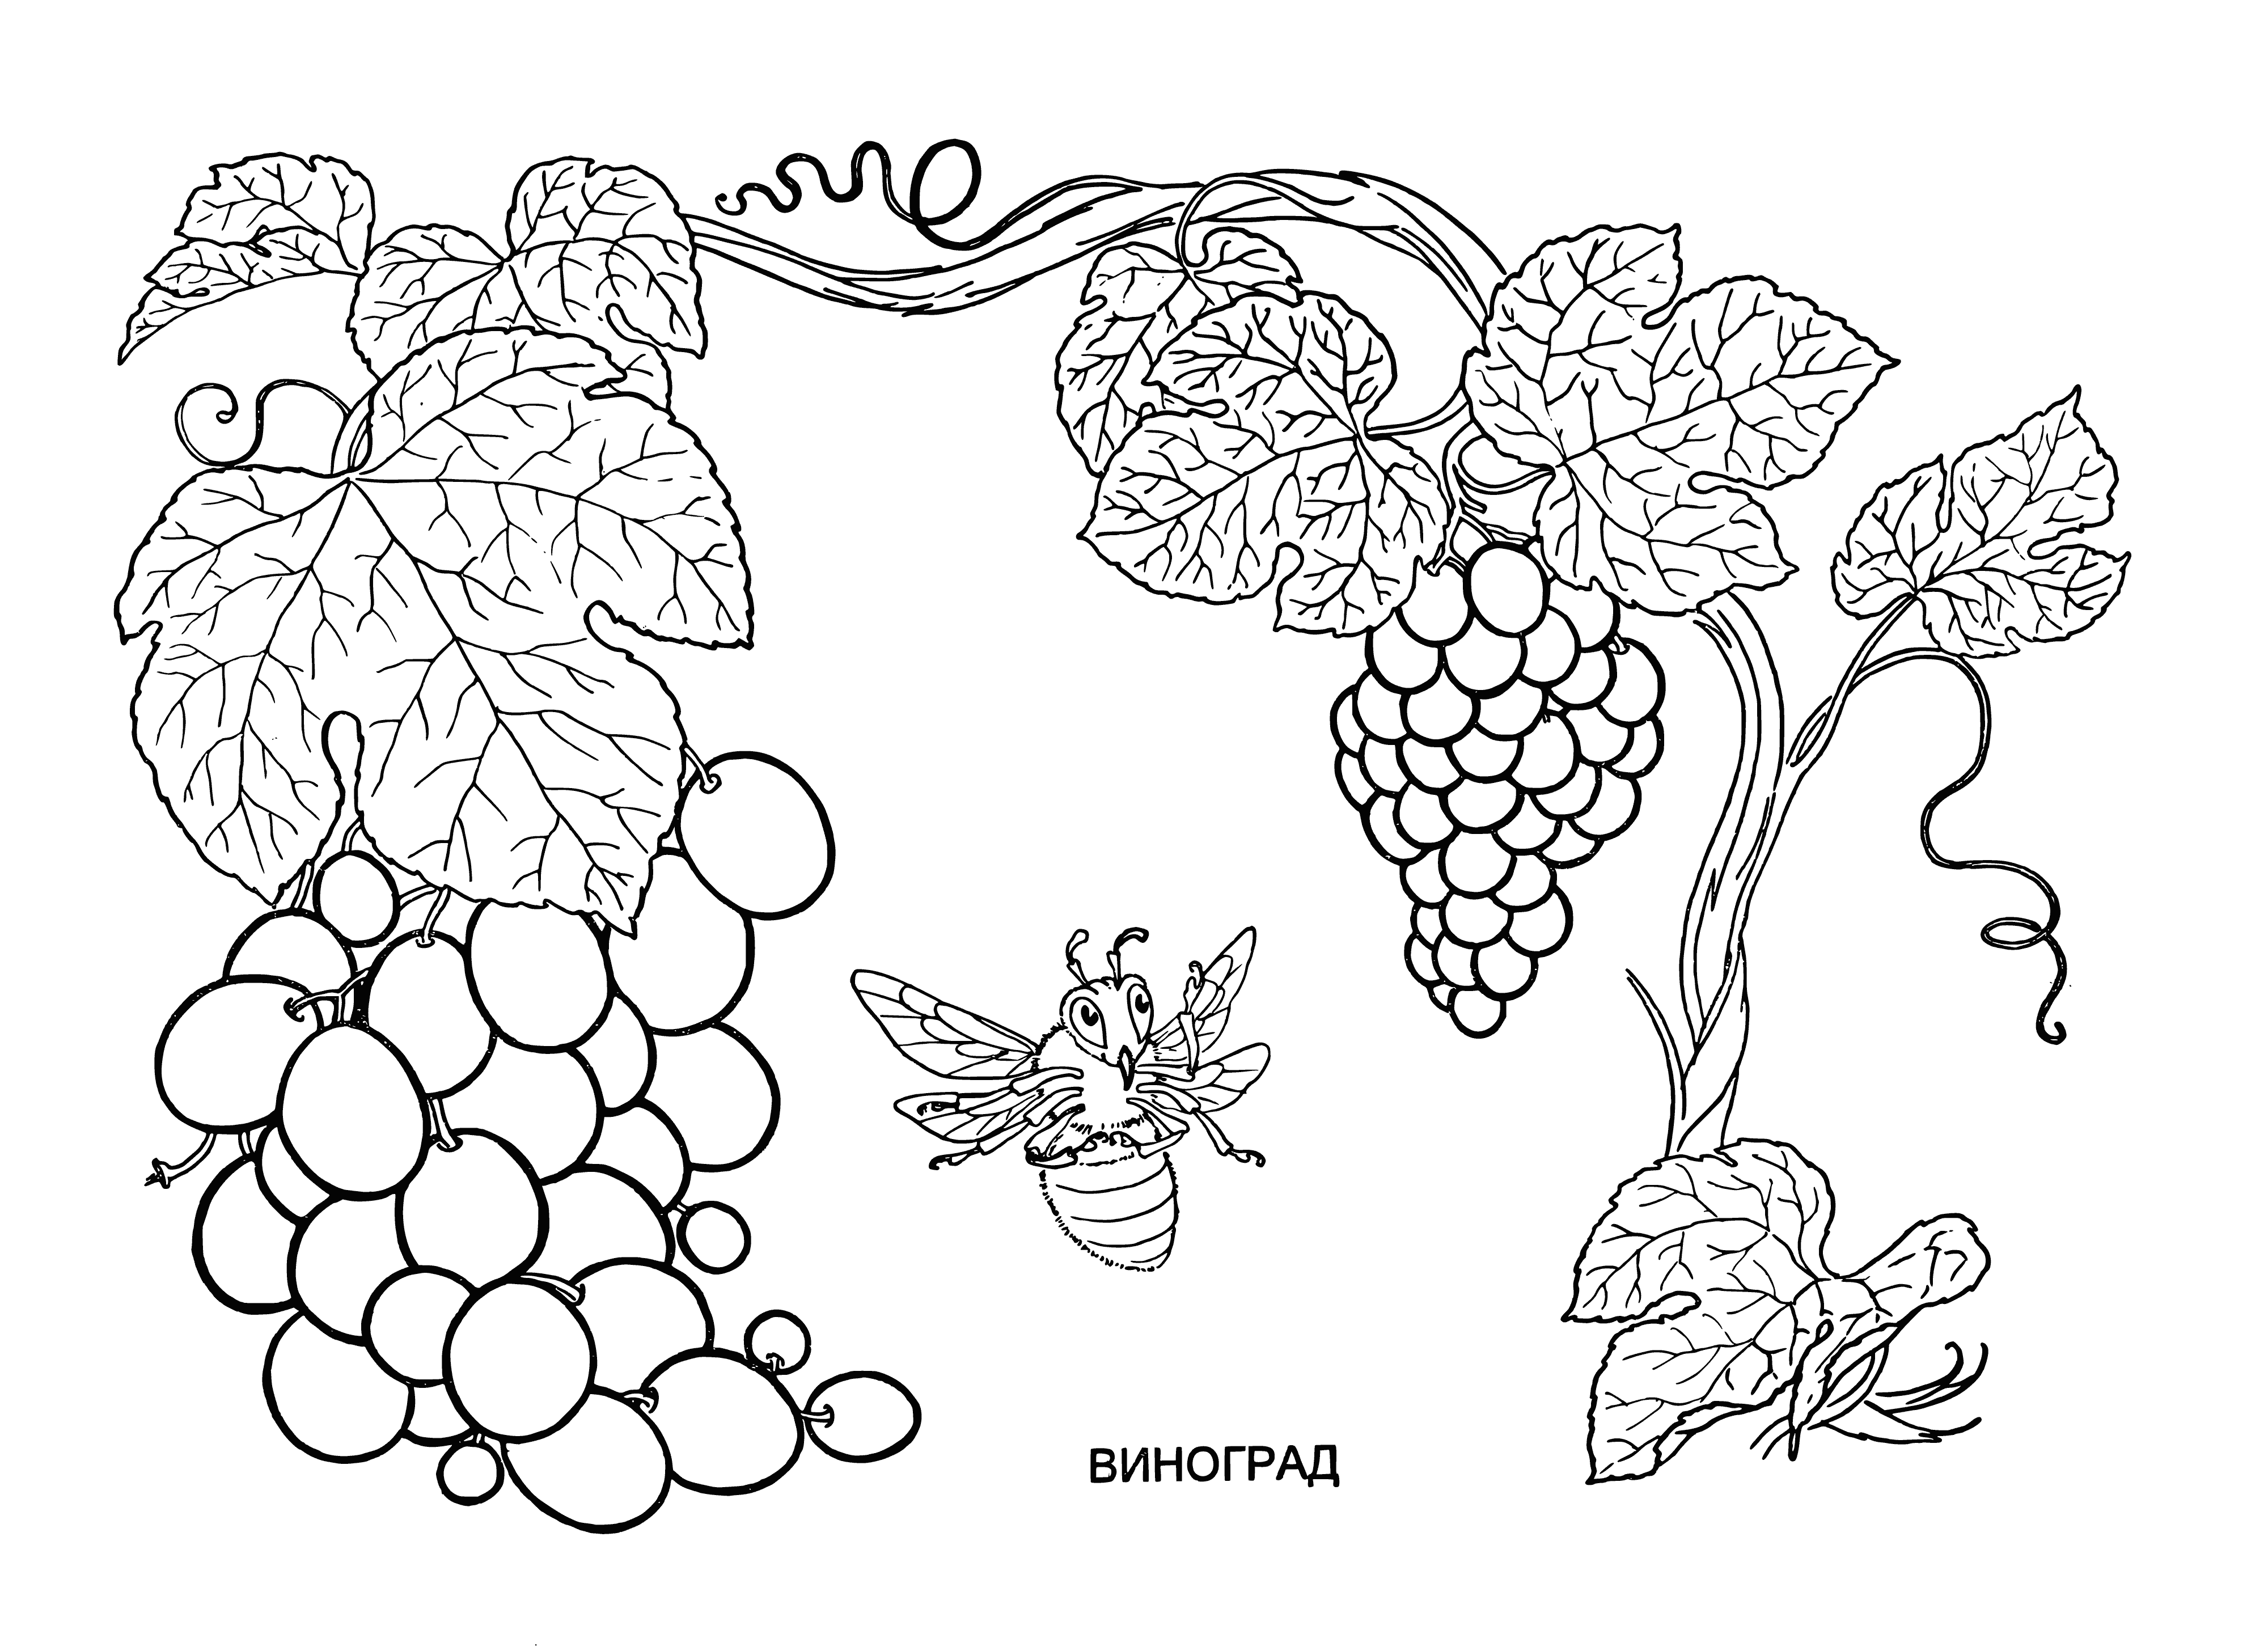 Vineyard coloring page